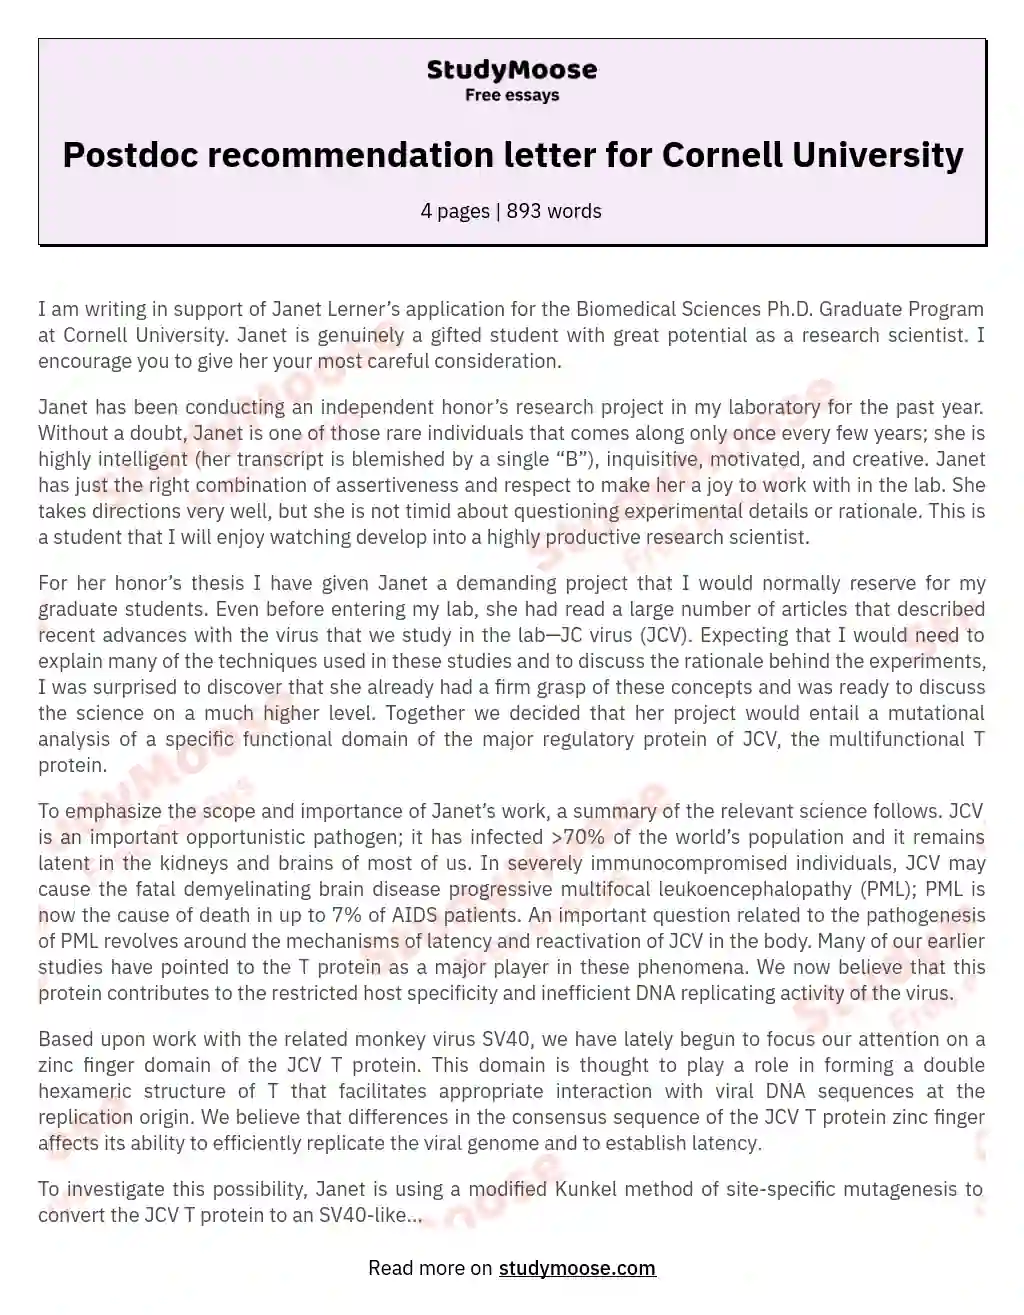 Postdoc recommendation letter for Cornell University essay